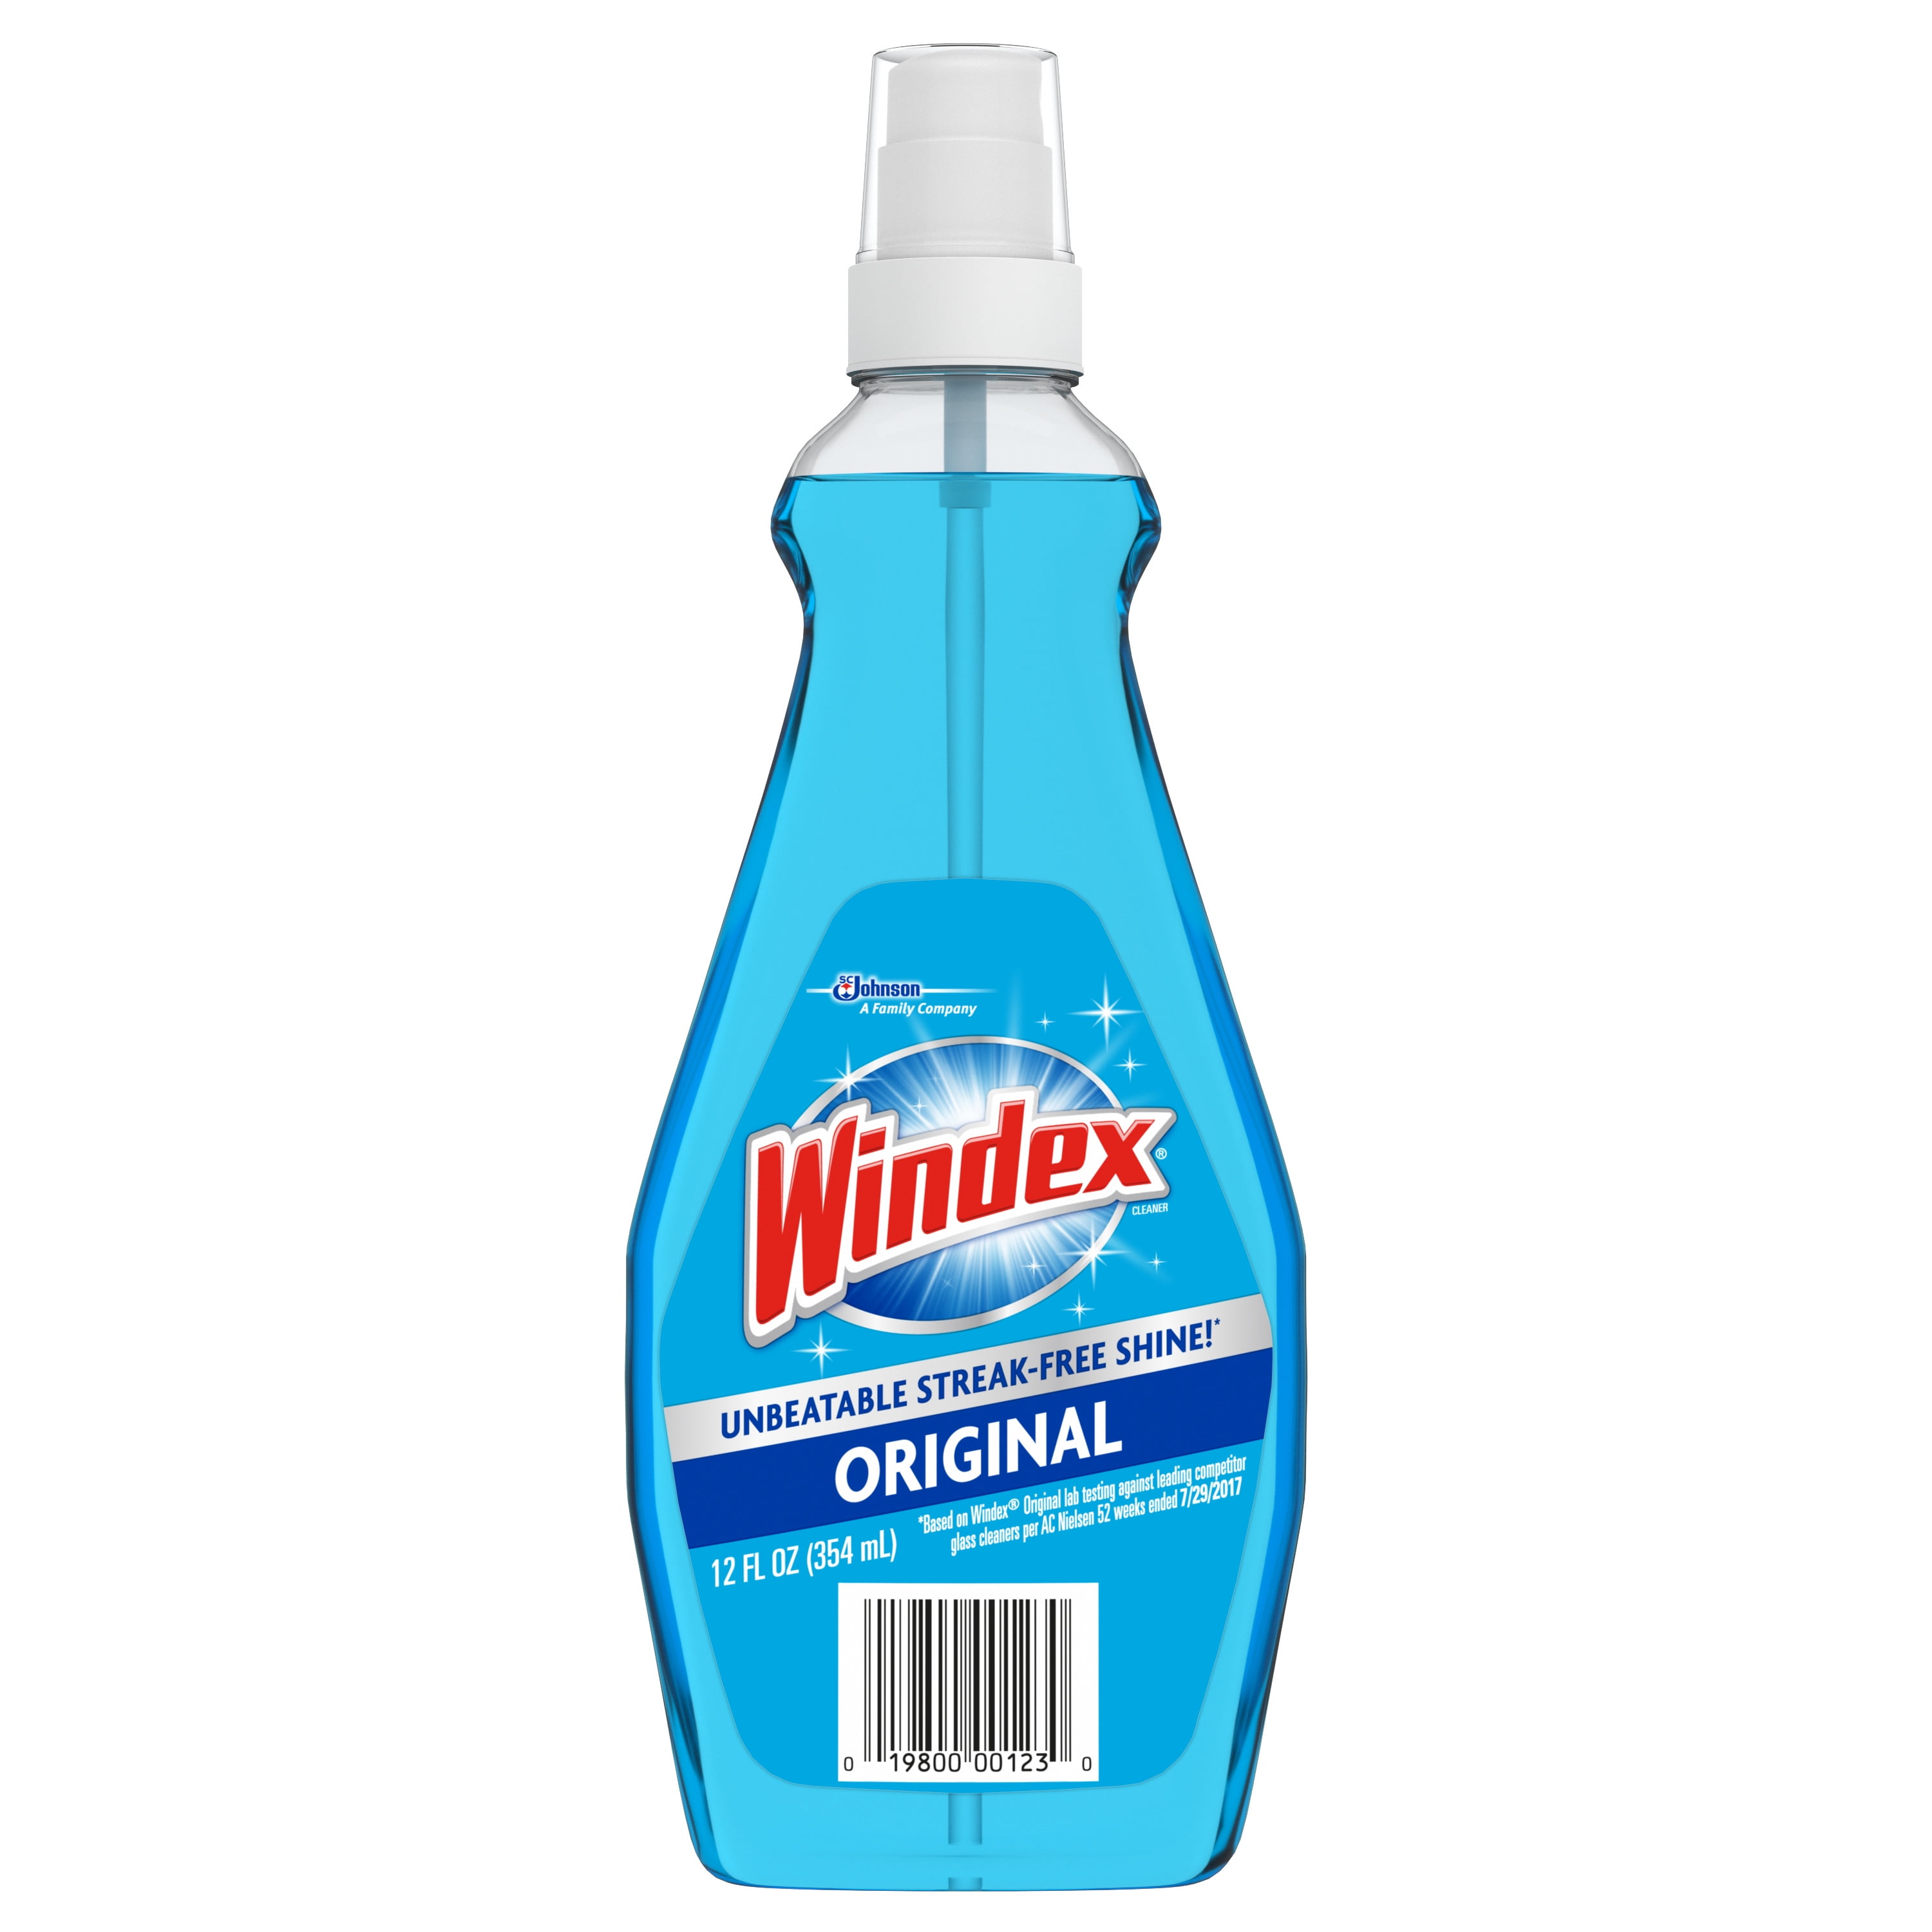  Windex Glass Vinegar Trigger 23 Fluid Ounces (5 Pack) : Health  & Household